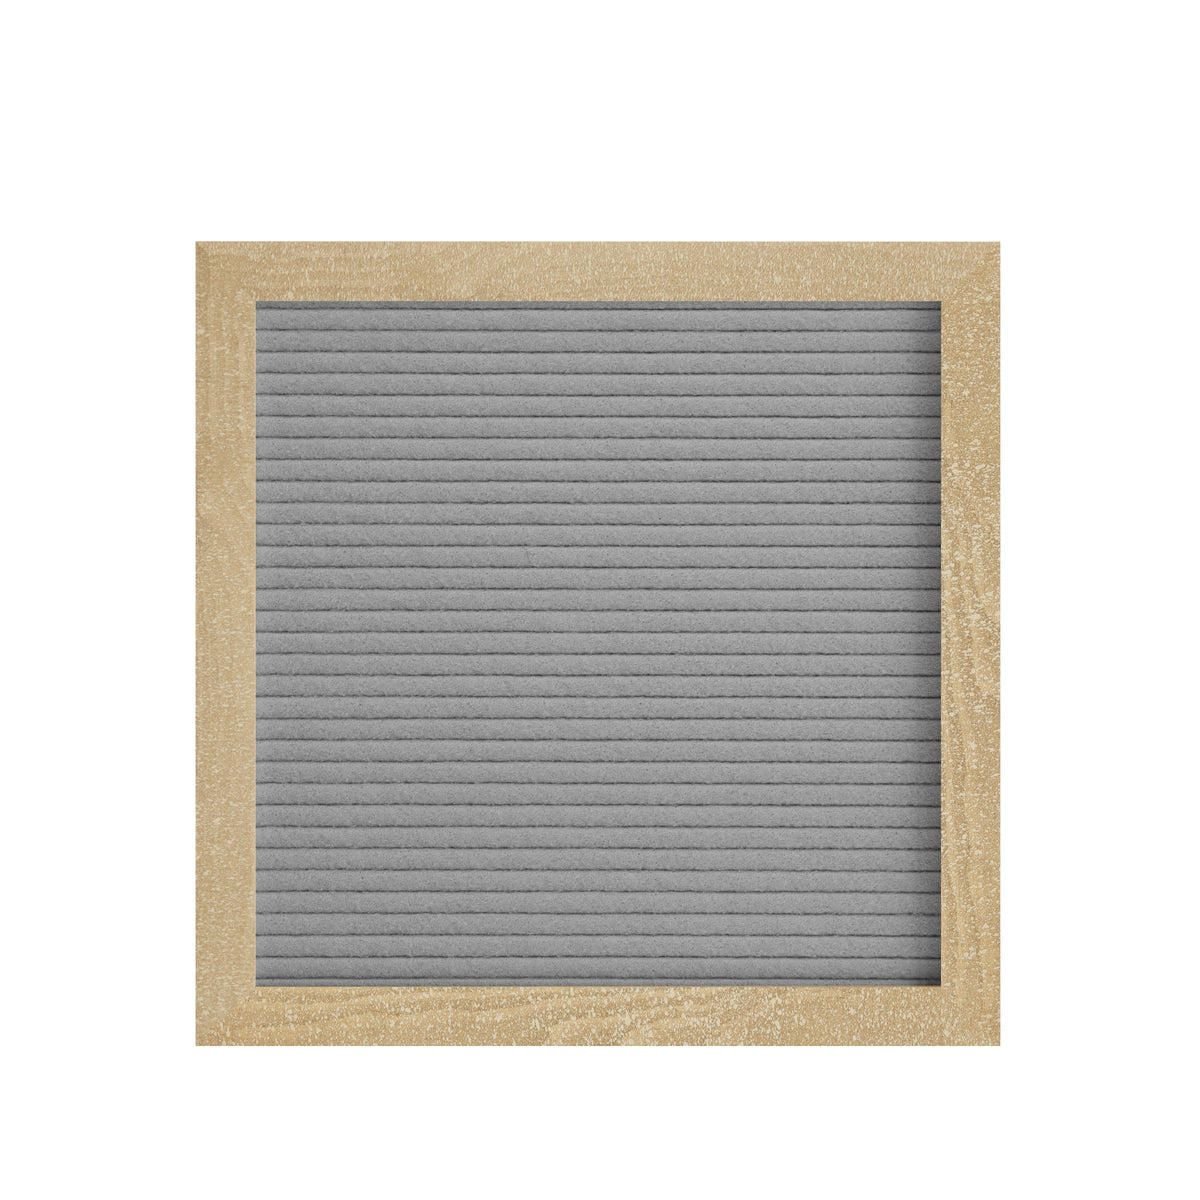 Weathered Wood Frame/Gray Felt,10"W x 10"H |#| 10x10 Wood Frame Letter Board with 389 PP Letters - Weathered Wood/Gray Felt